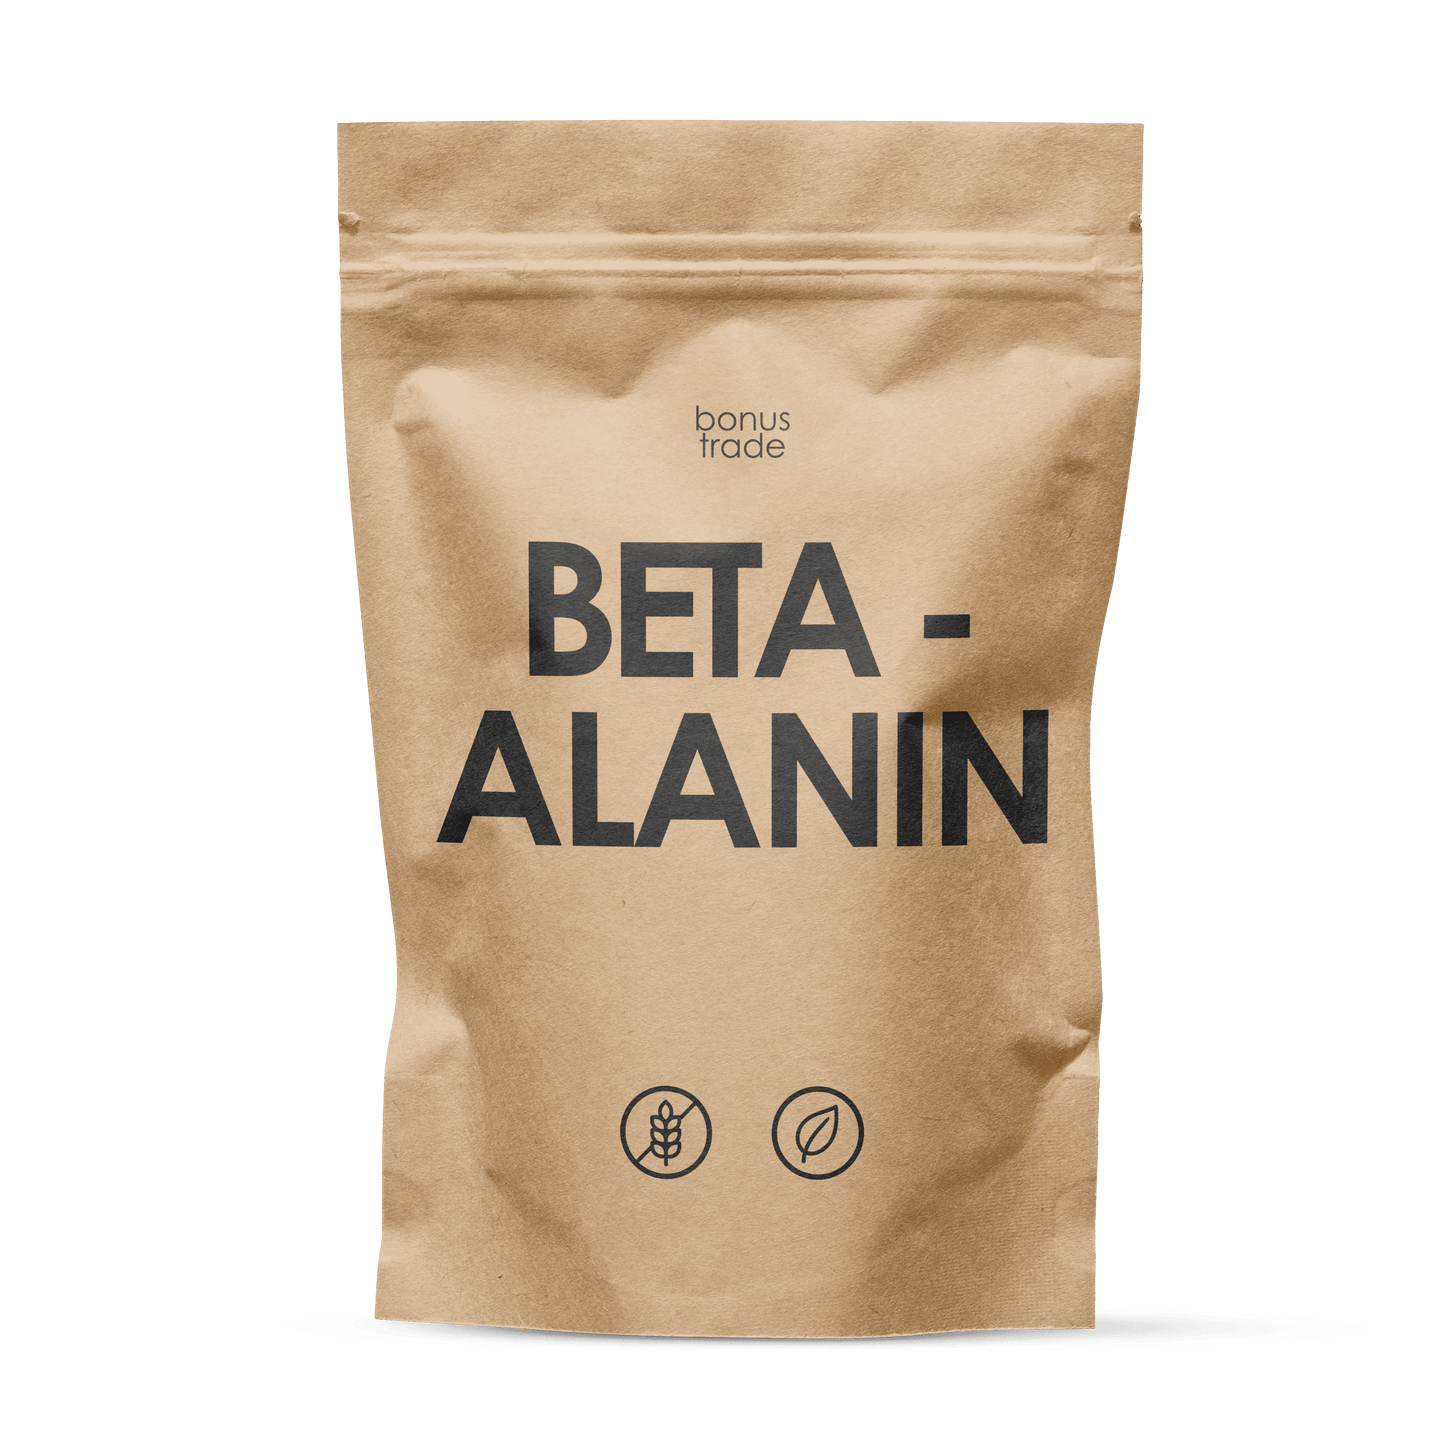 bonus-Beta_Alanin-min